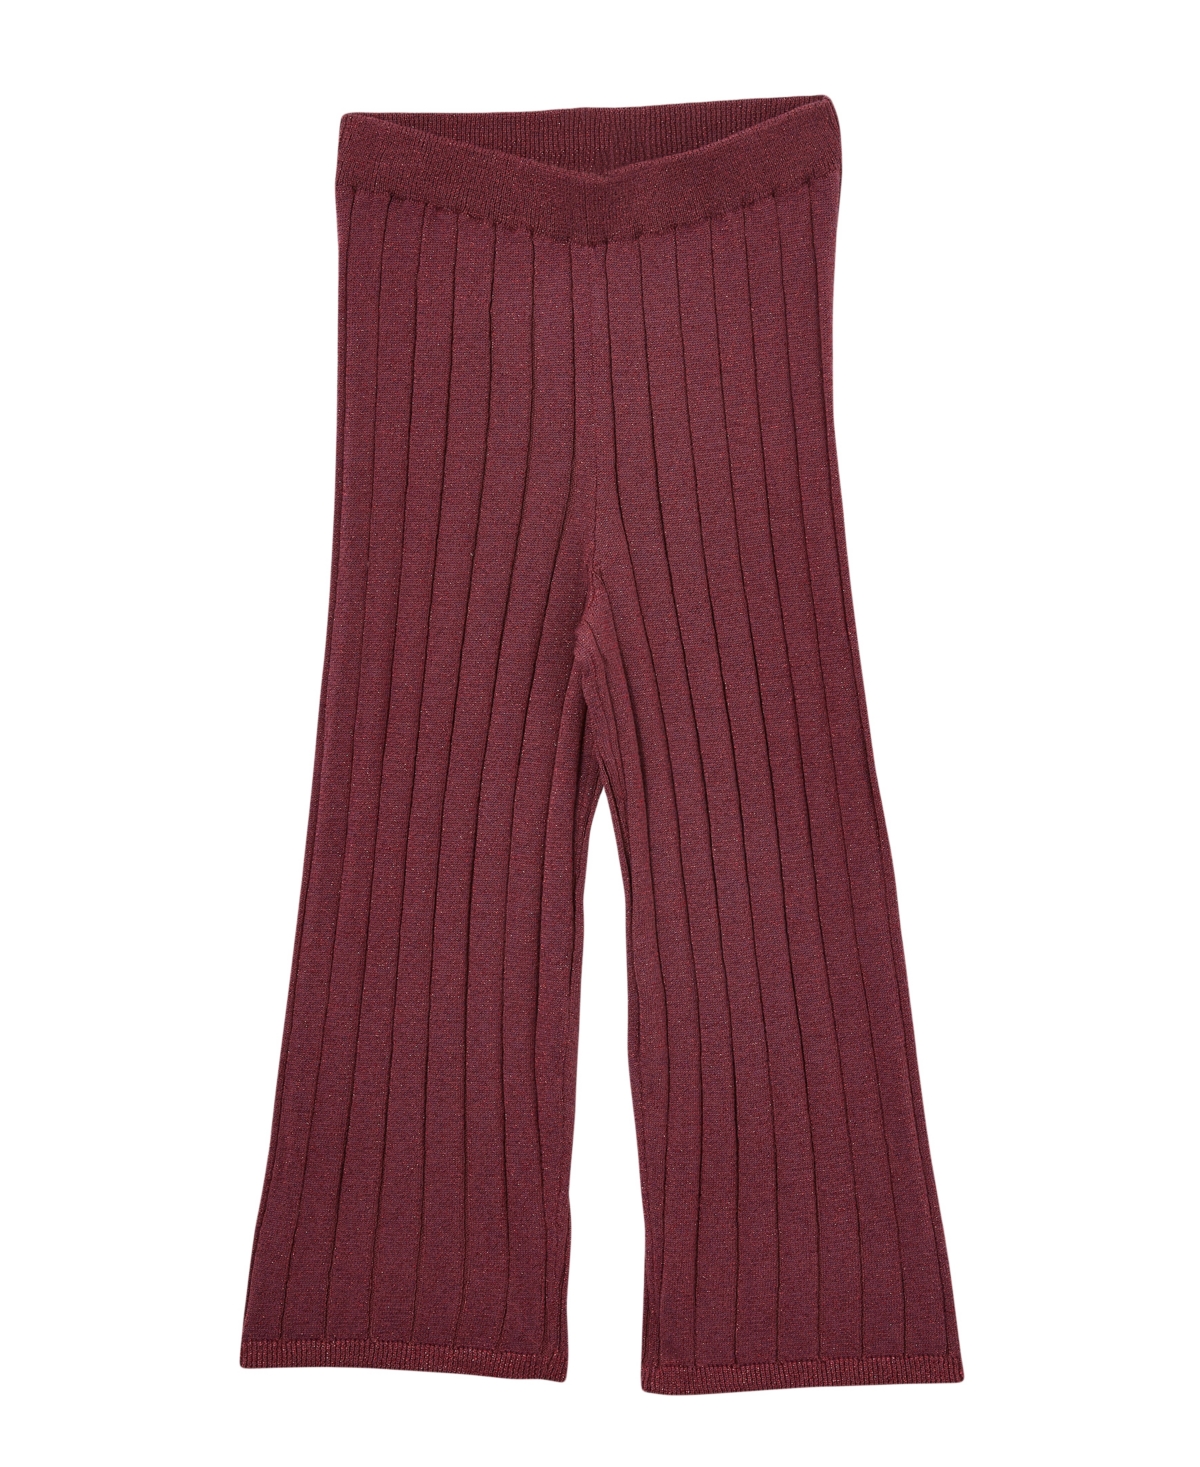 Cotton On Kids' Little Girls Jenna Lurex Knit Pants In Vintage Berry Sparkle